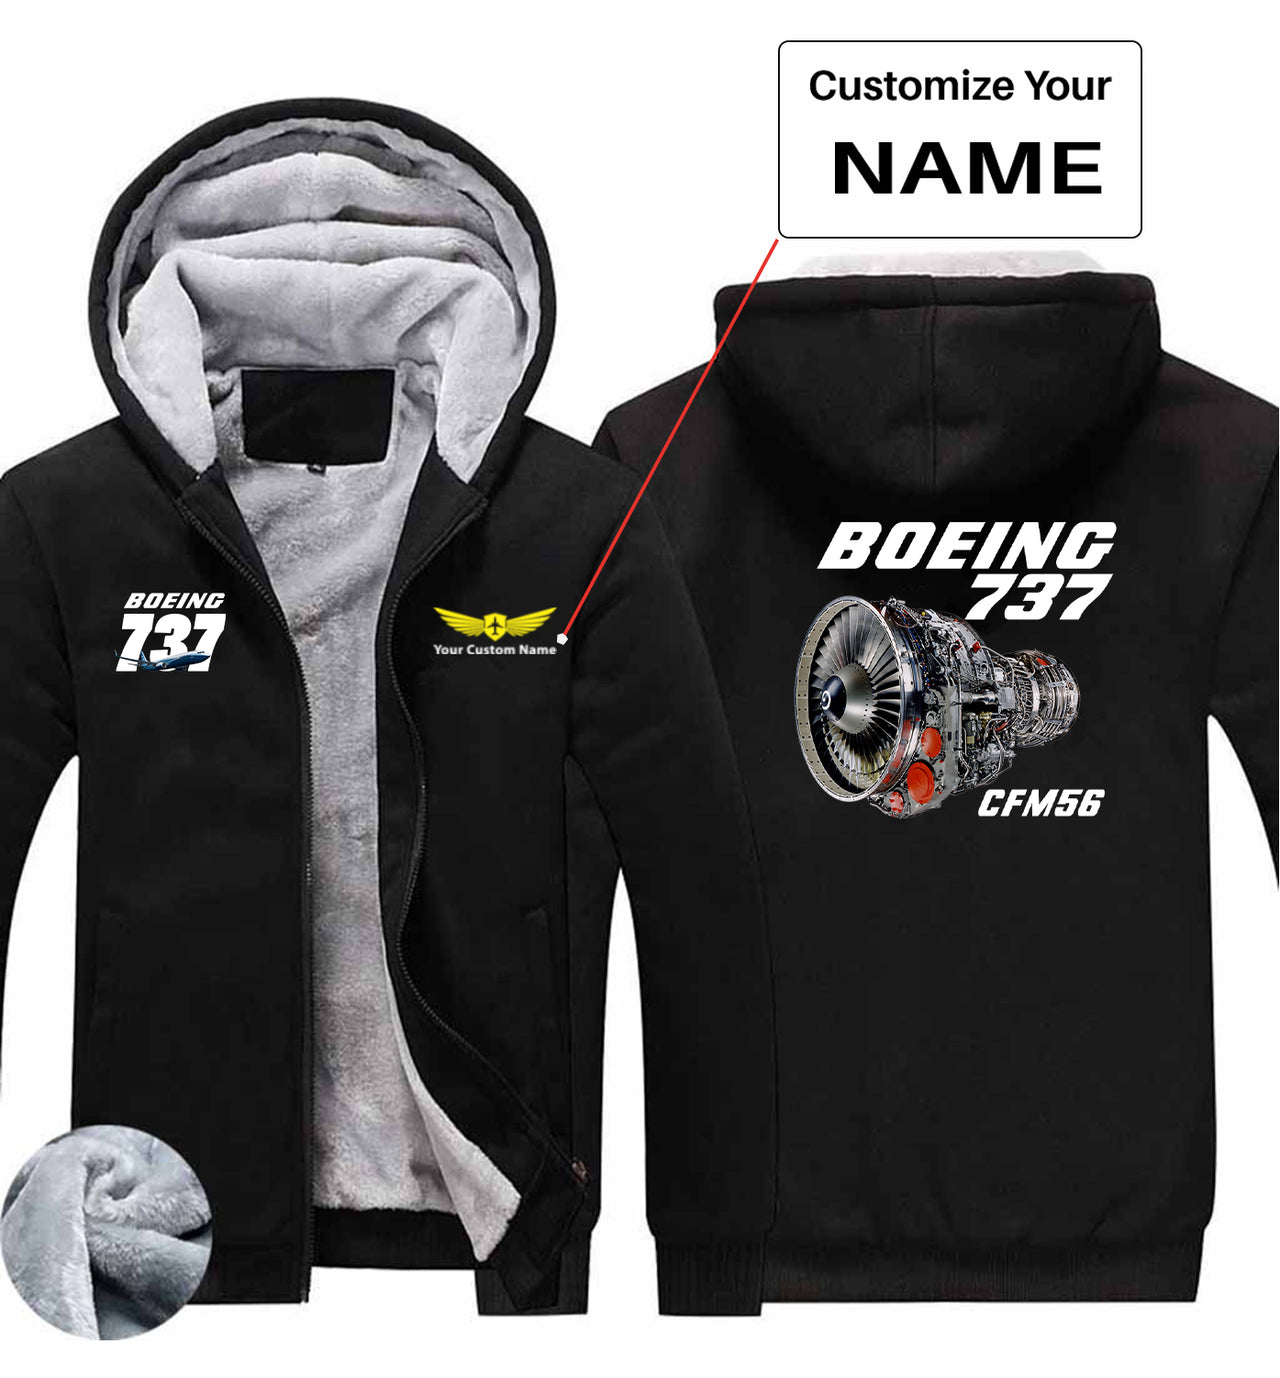 Boeing 737 Engine & CFM56 Designed Zipped Sweatshirts